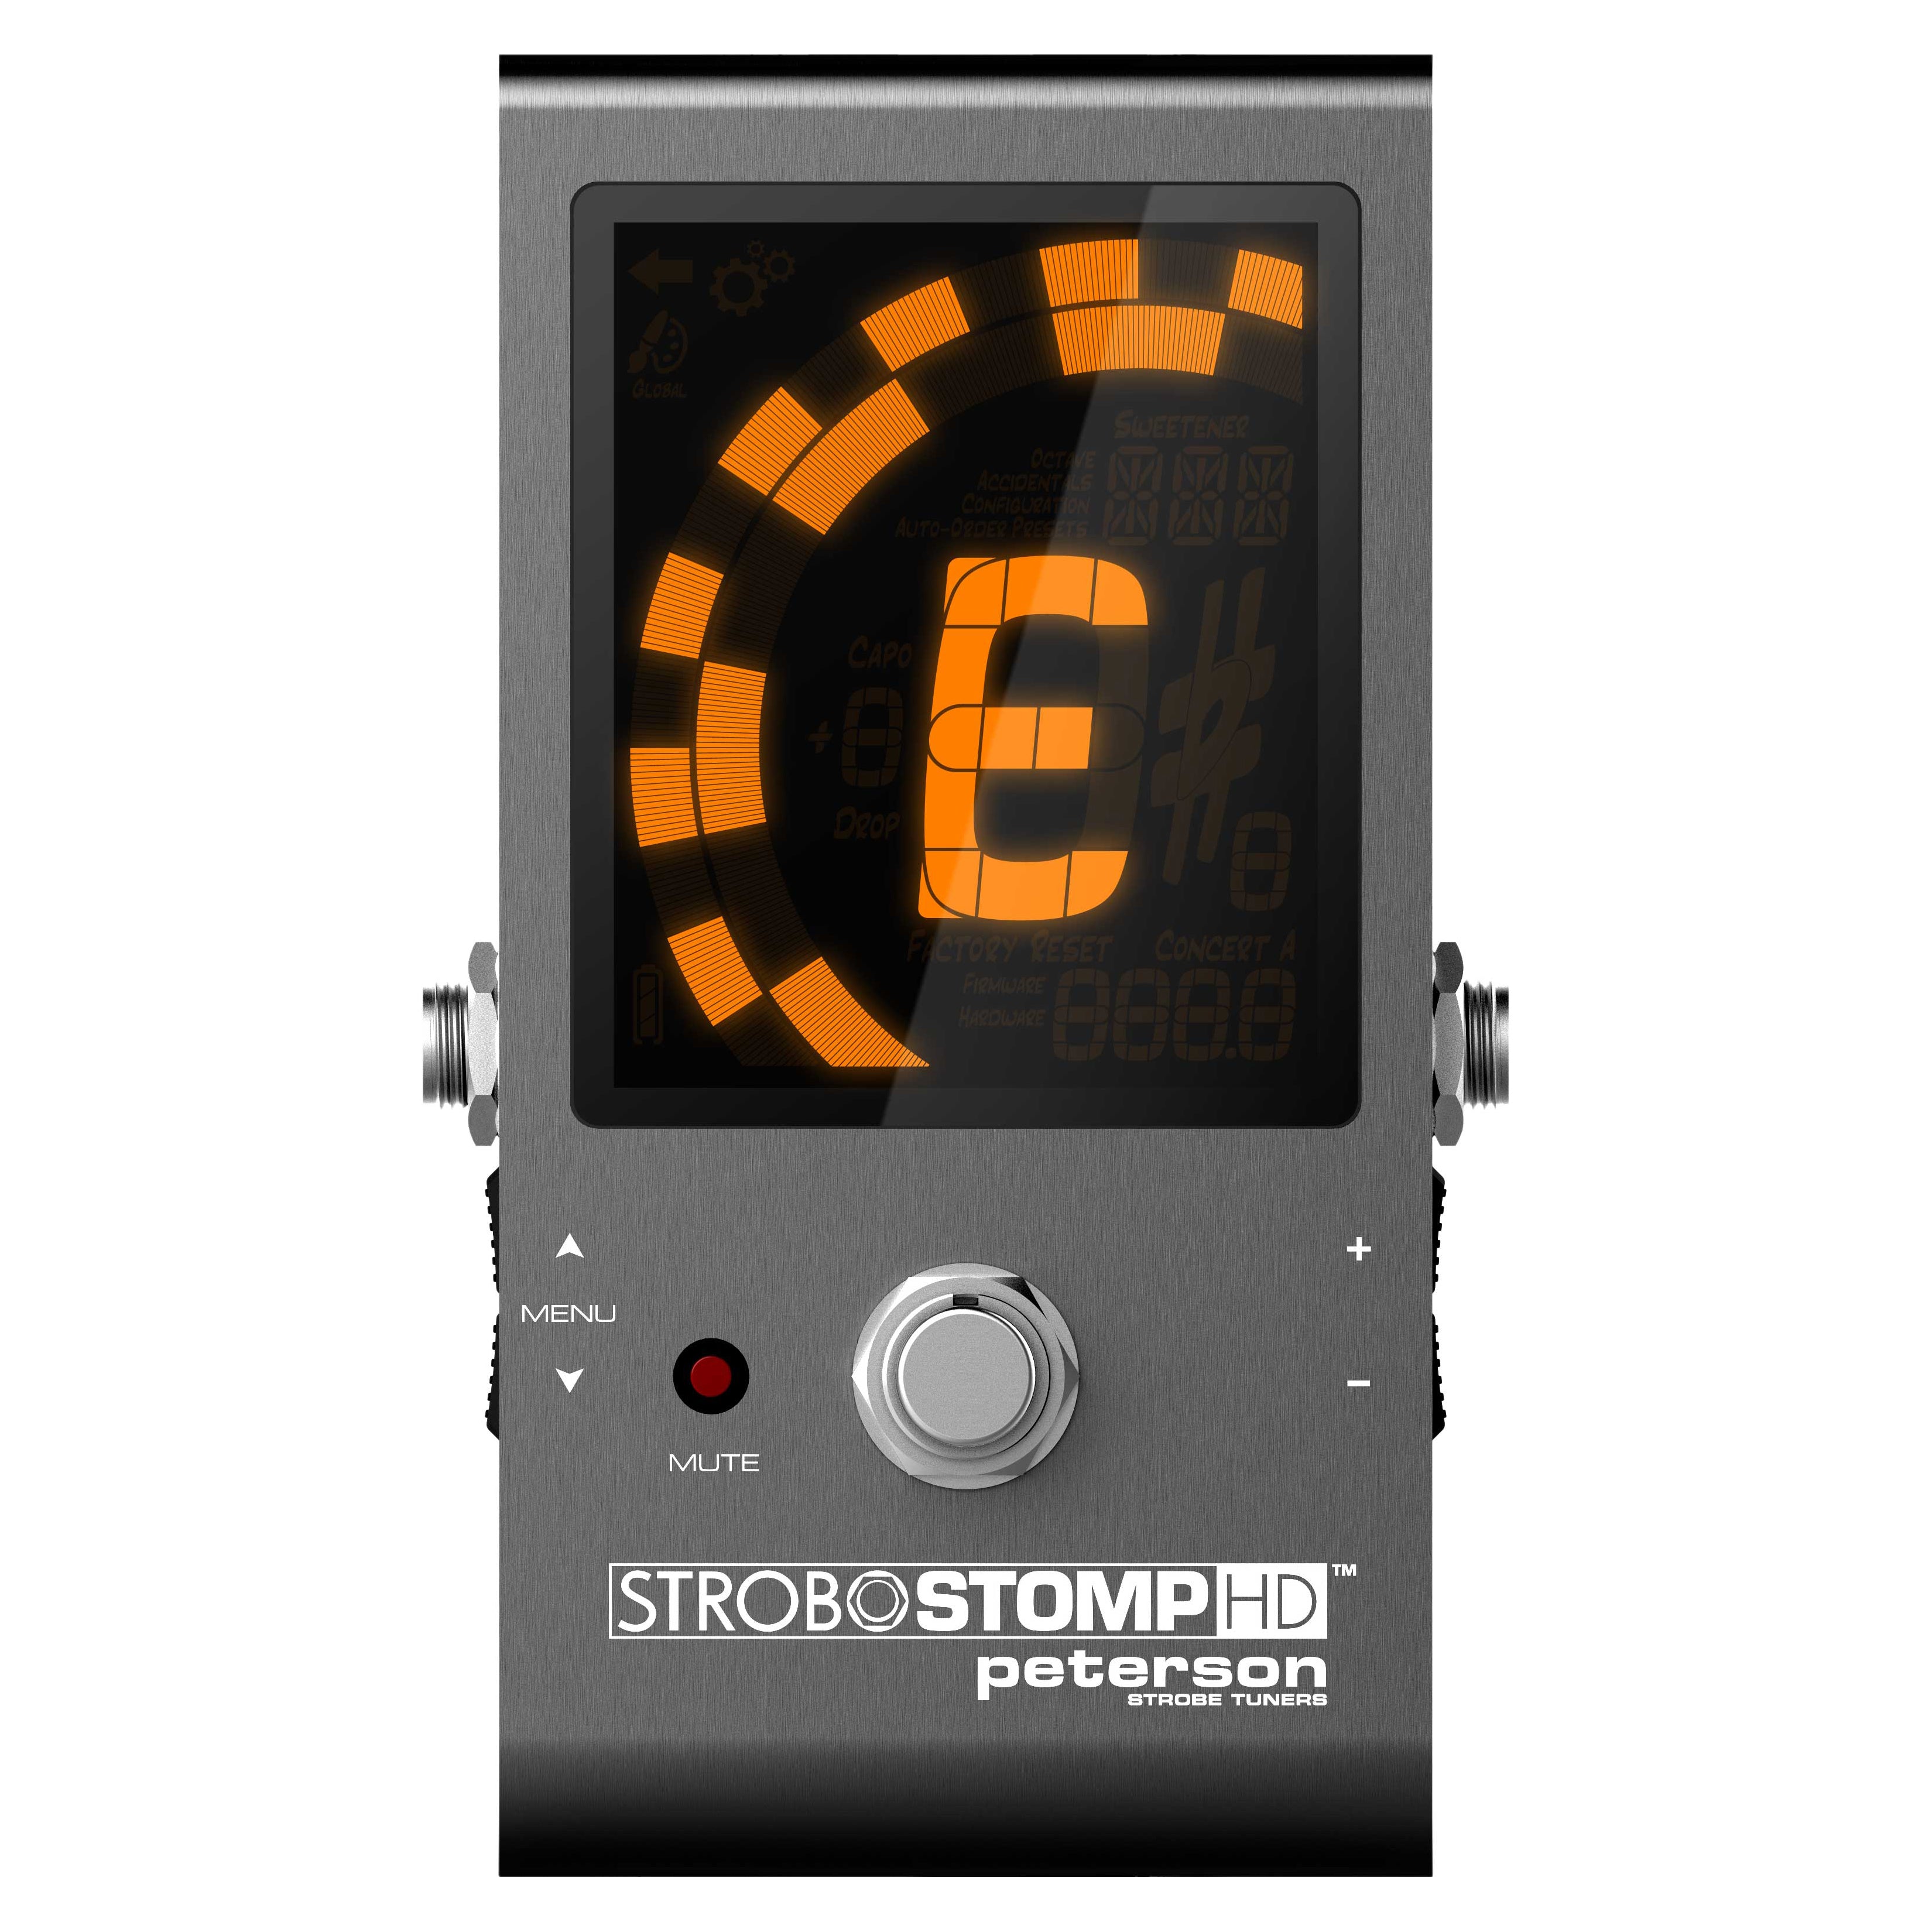 Peterson Strobe Tuners - StroboStomp HD